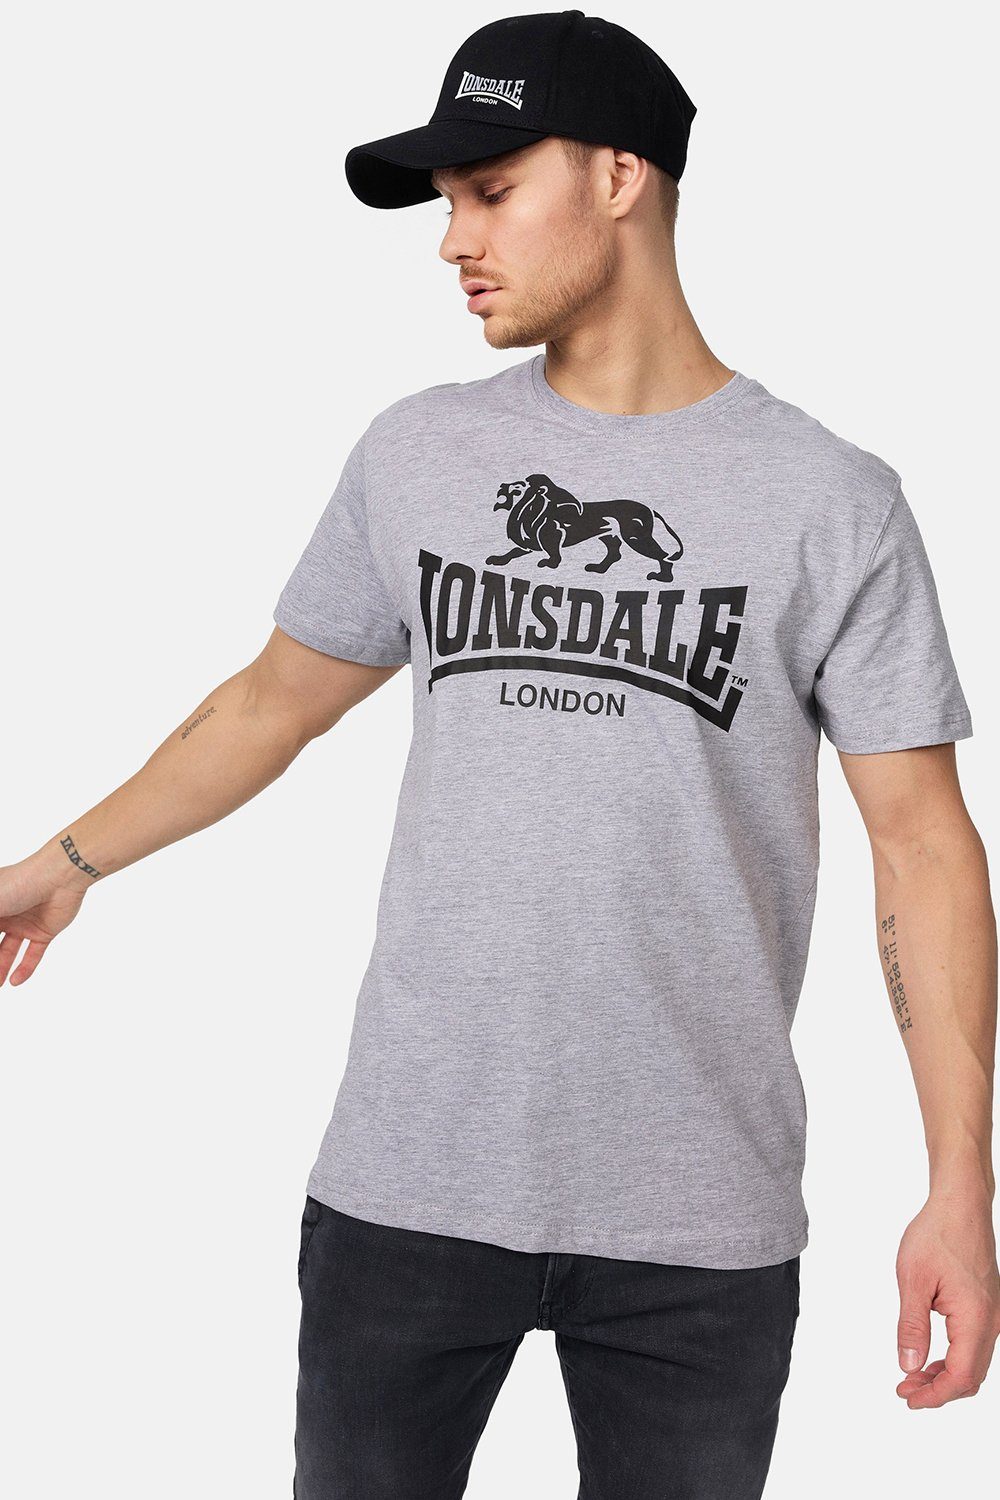 T-Shirt Grey Marl Lonsdale LOGO